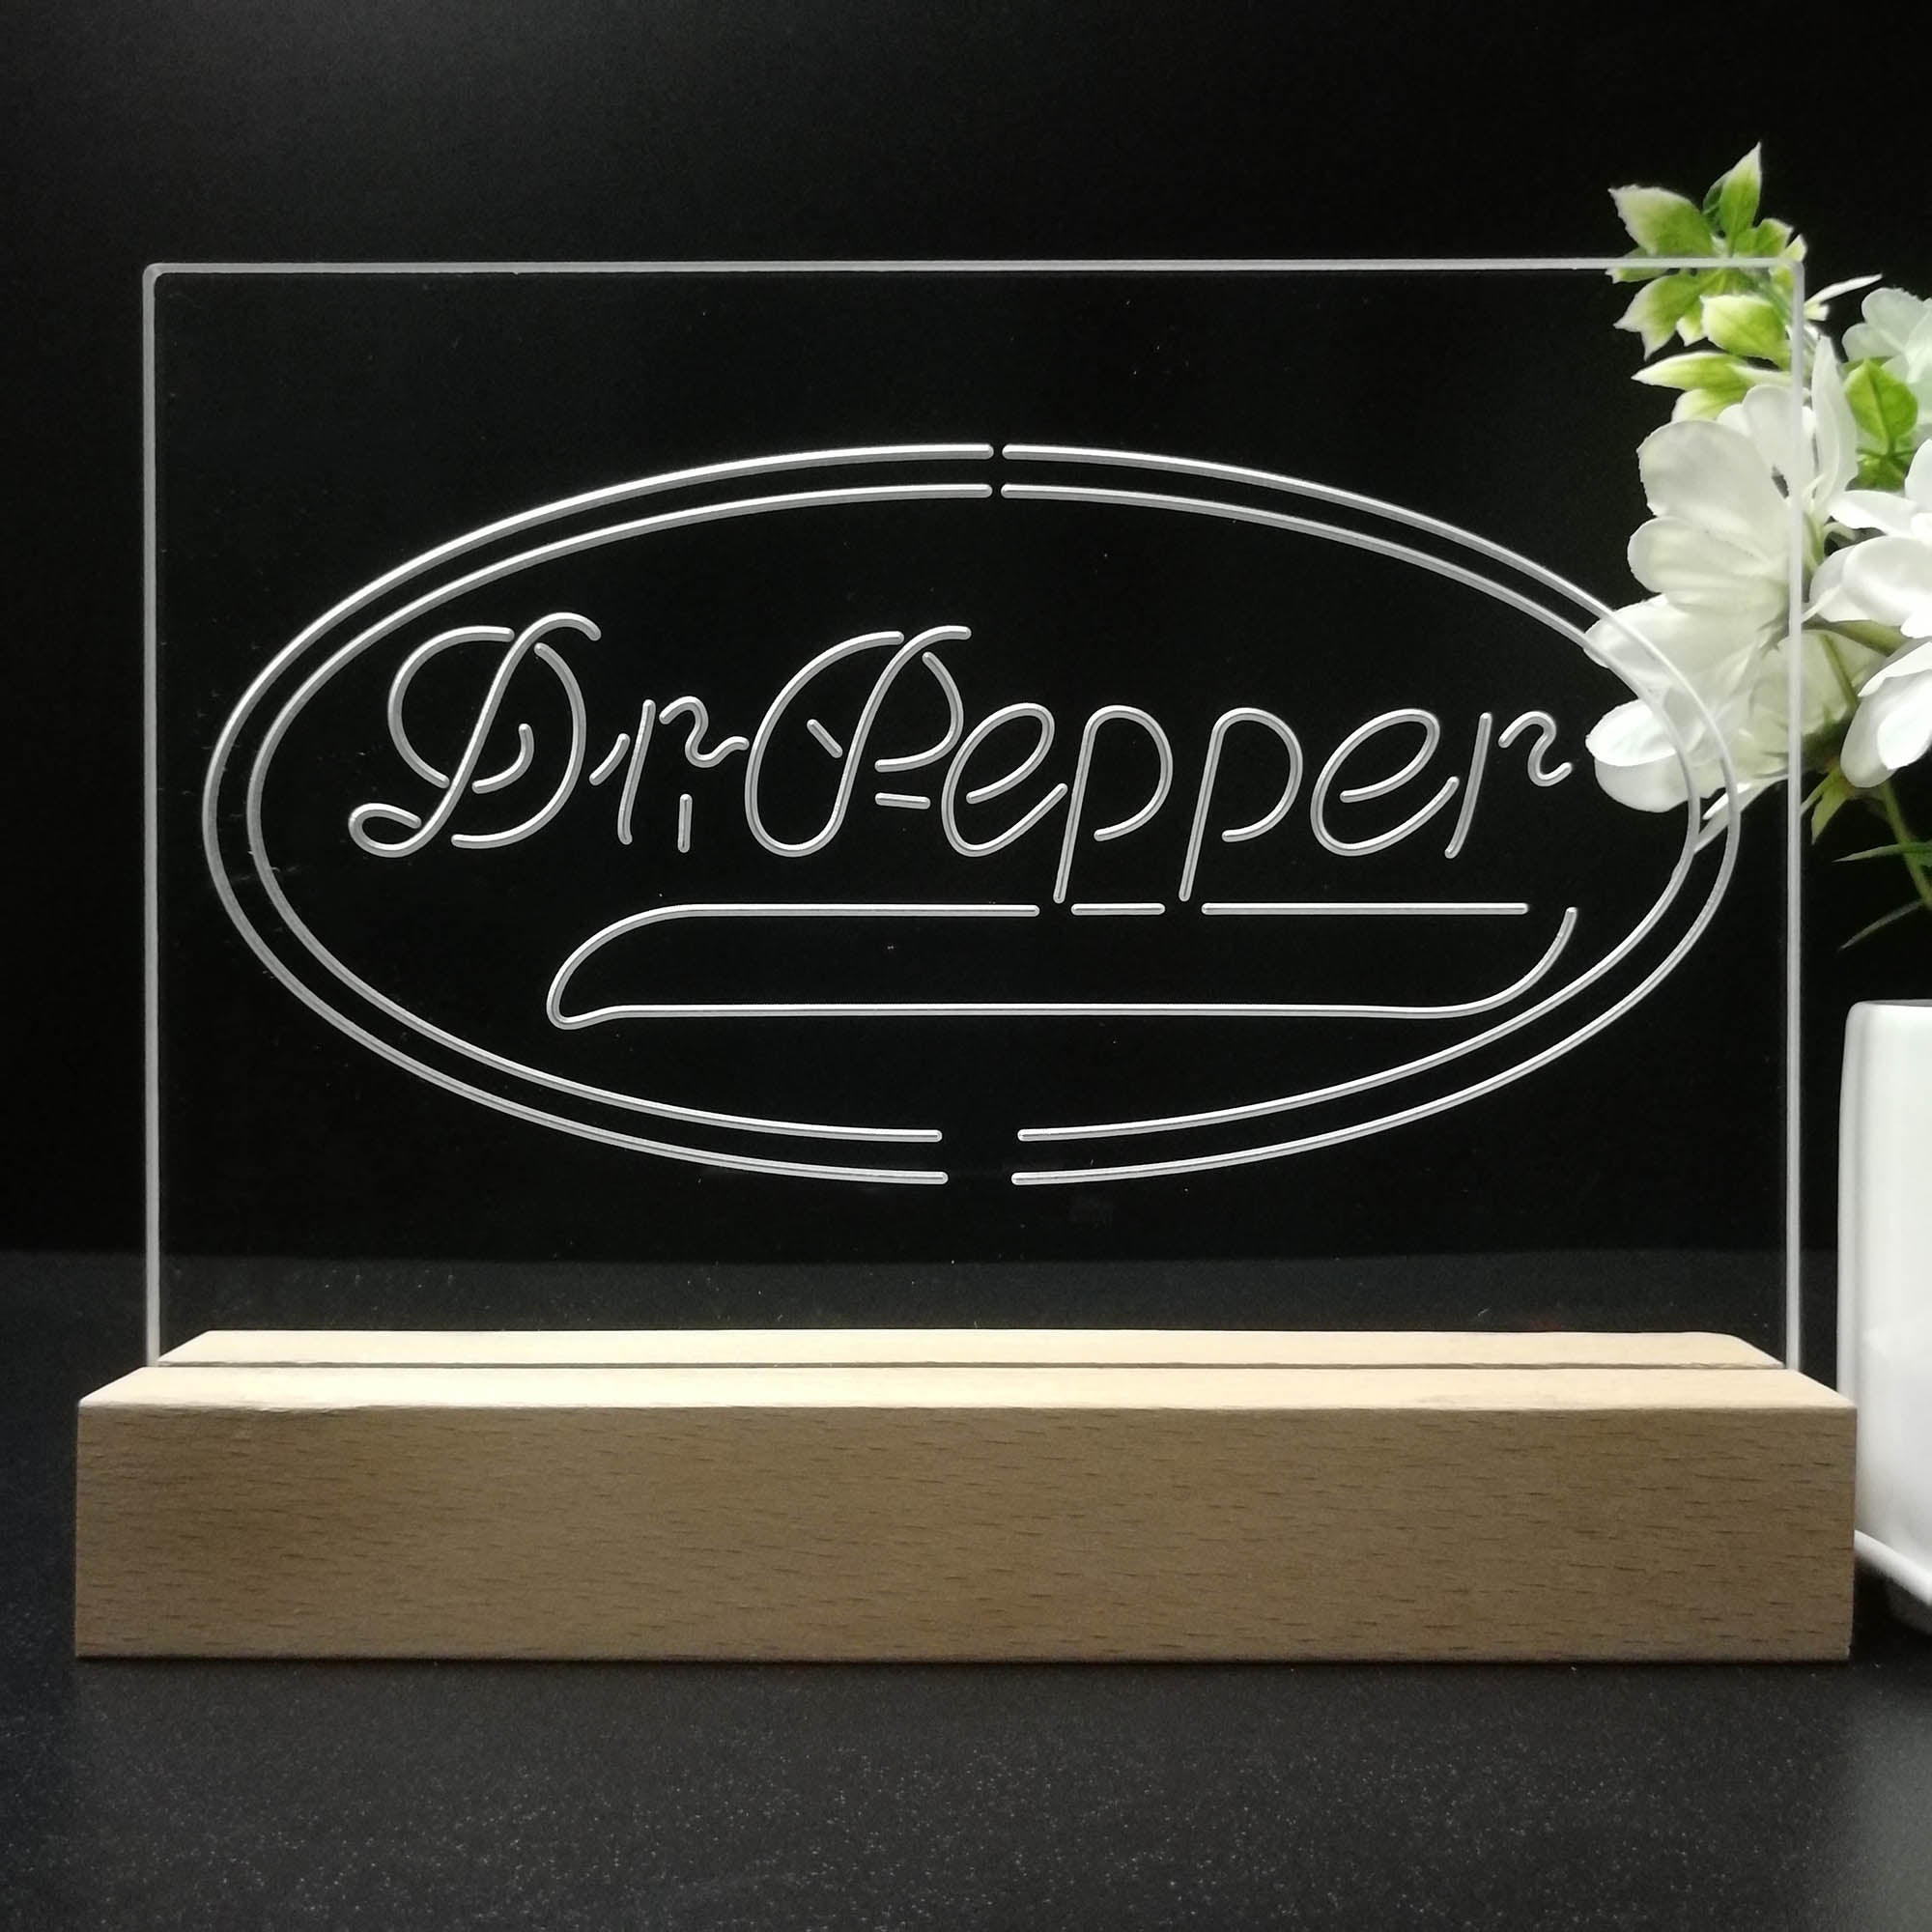 Dr Pepper Soft Drink Neon Sign Pub Bar Decor Lamp